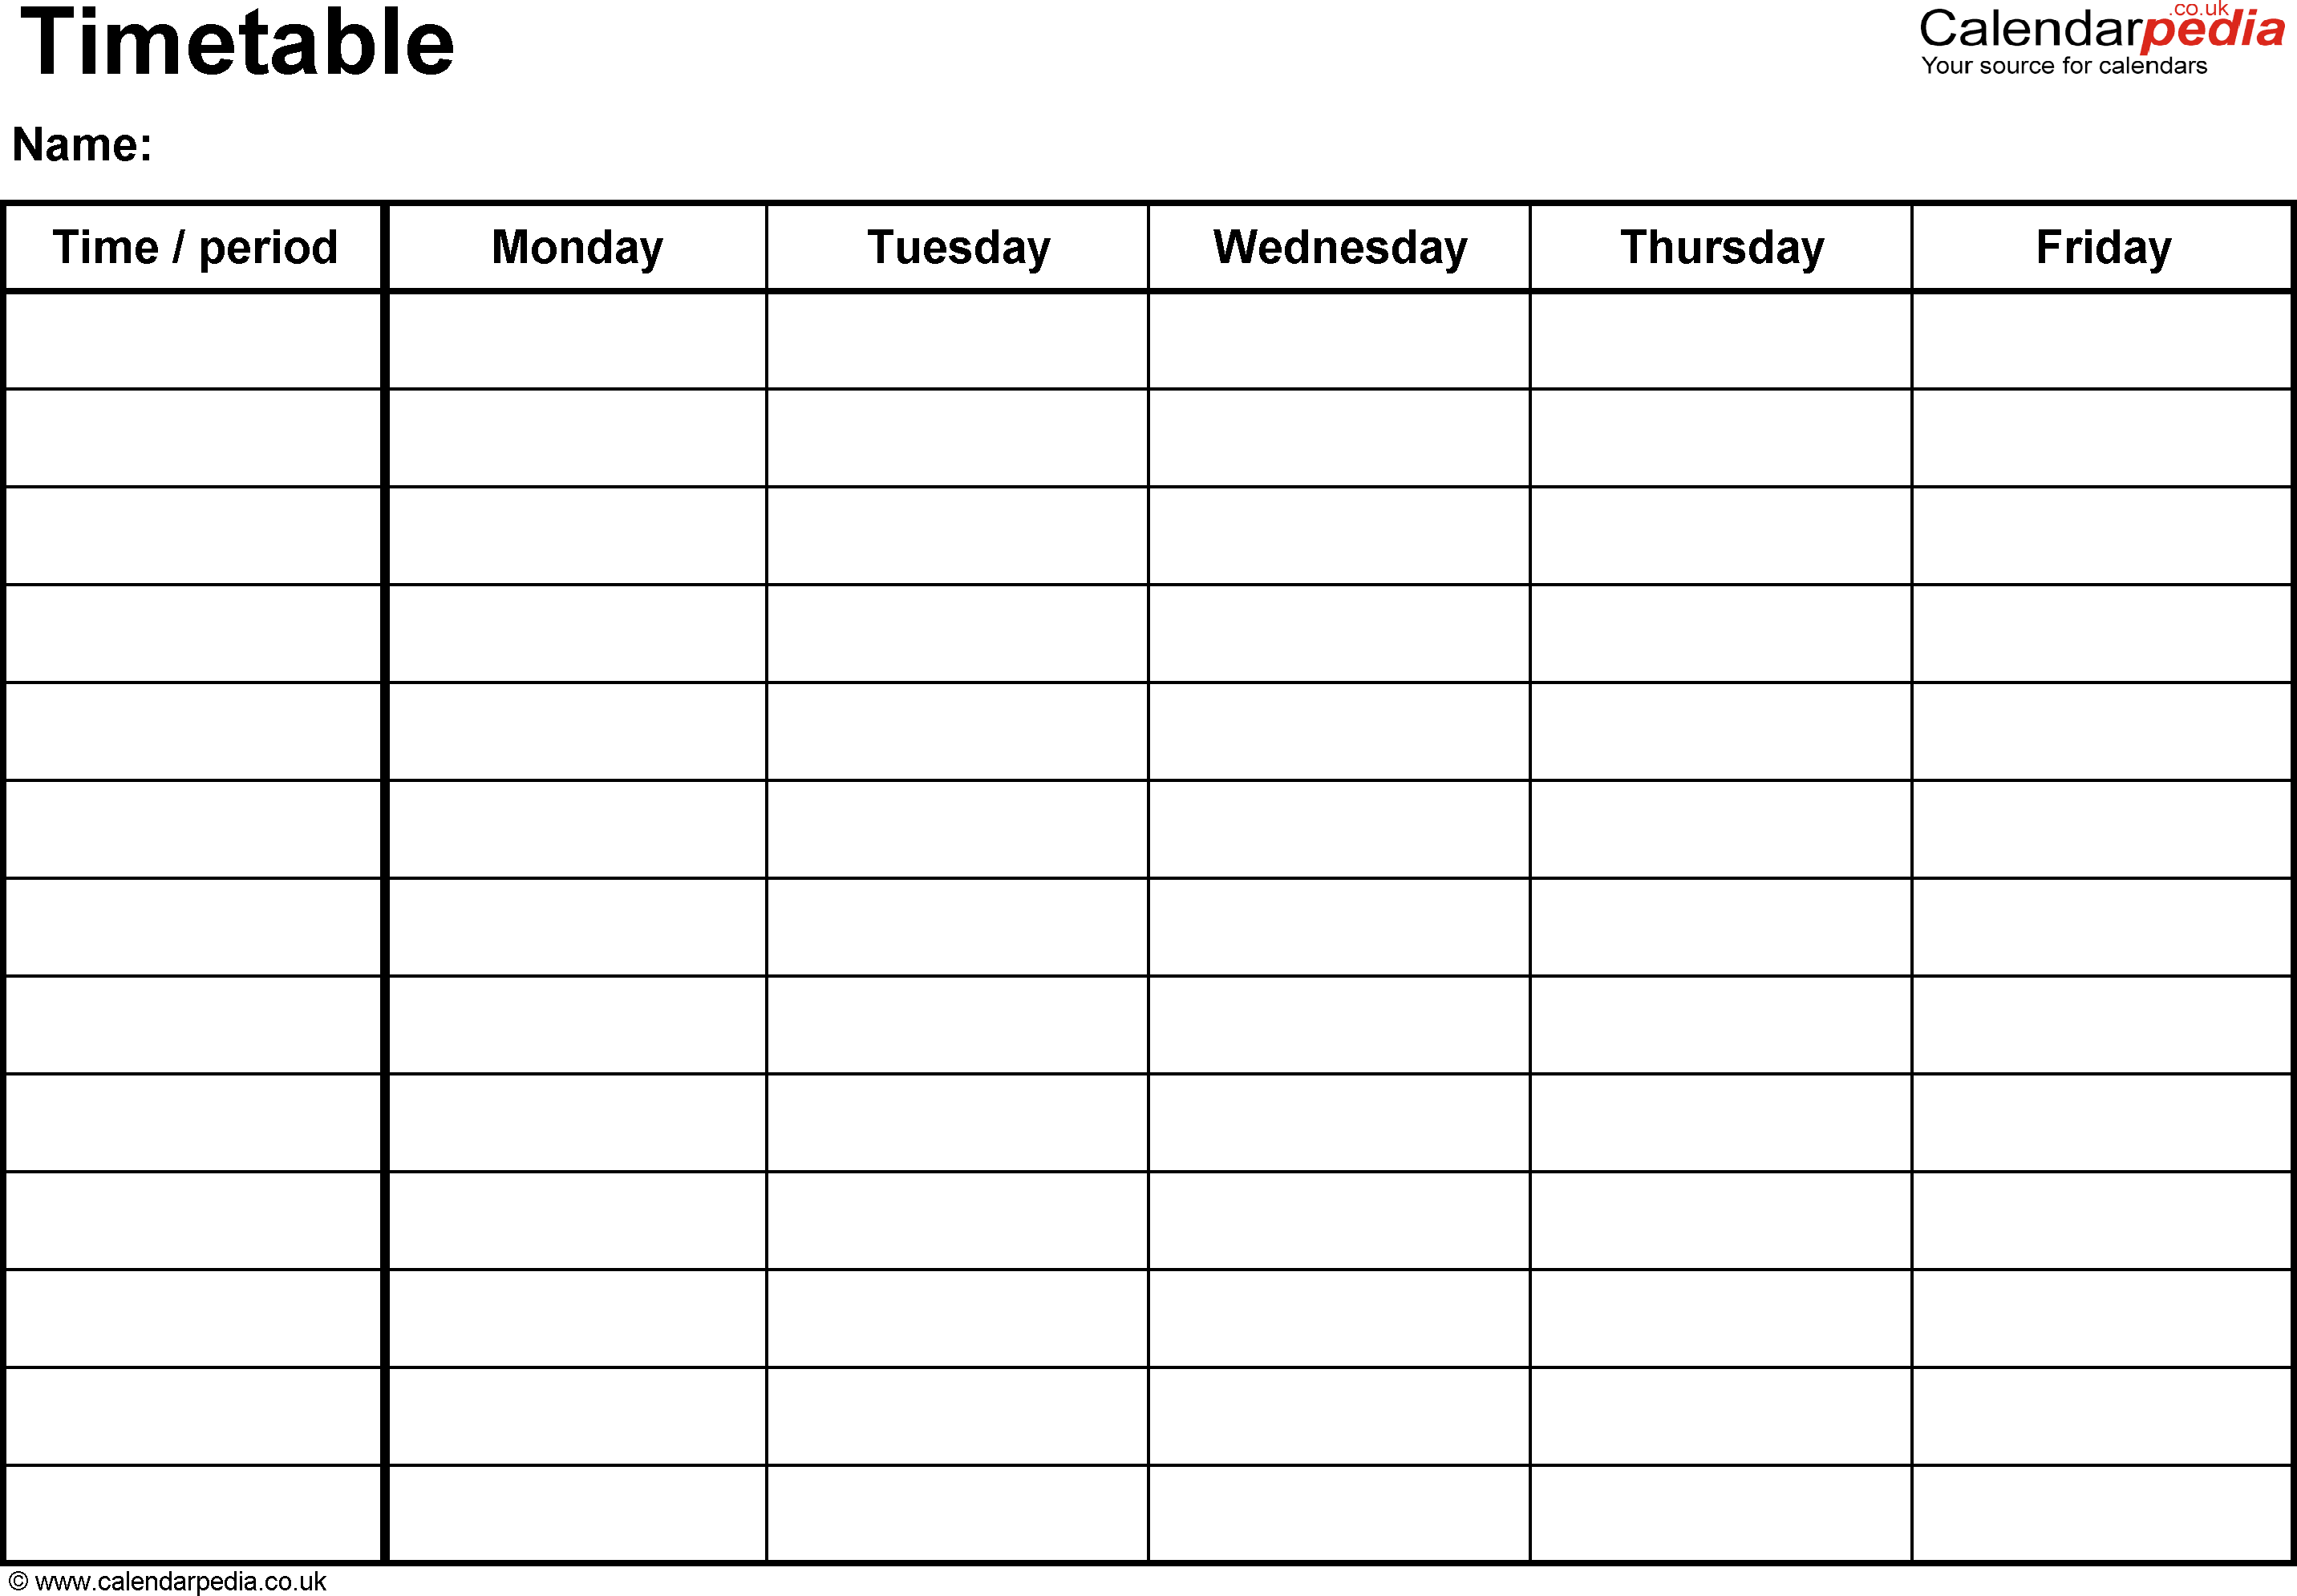 Free Printable Work Schedules | Weekly Employee Work Schedule 